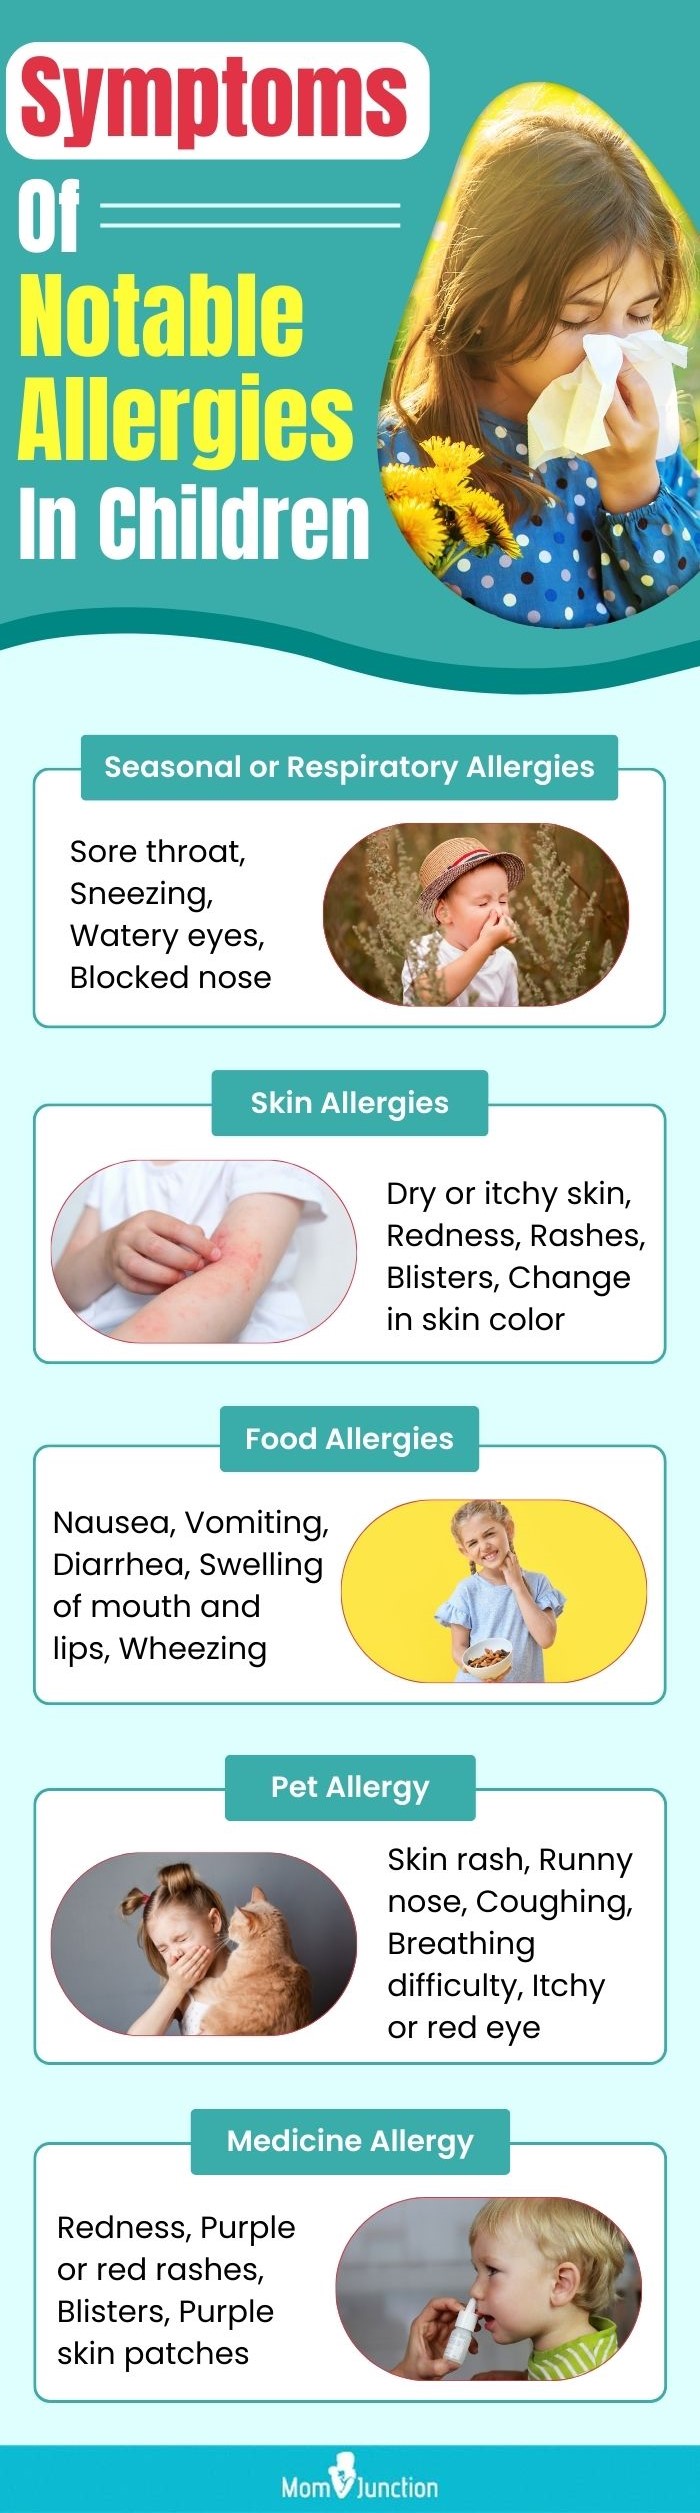 symptoms of notable allergies in children (infographic)